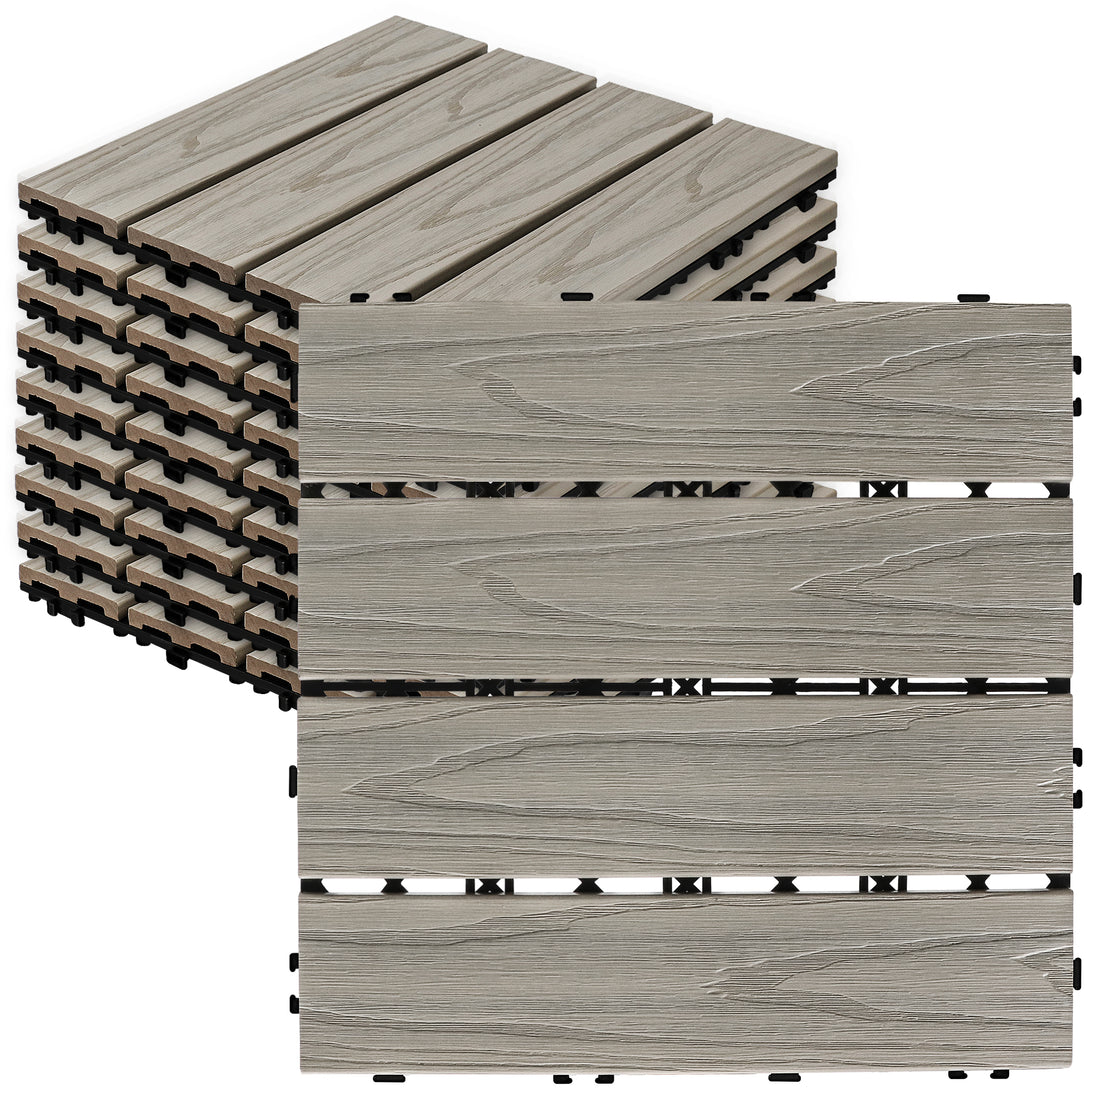 Pure Era - Interlocking Patio Tiles Composite Deck Tiles - Gray